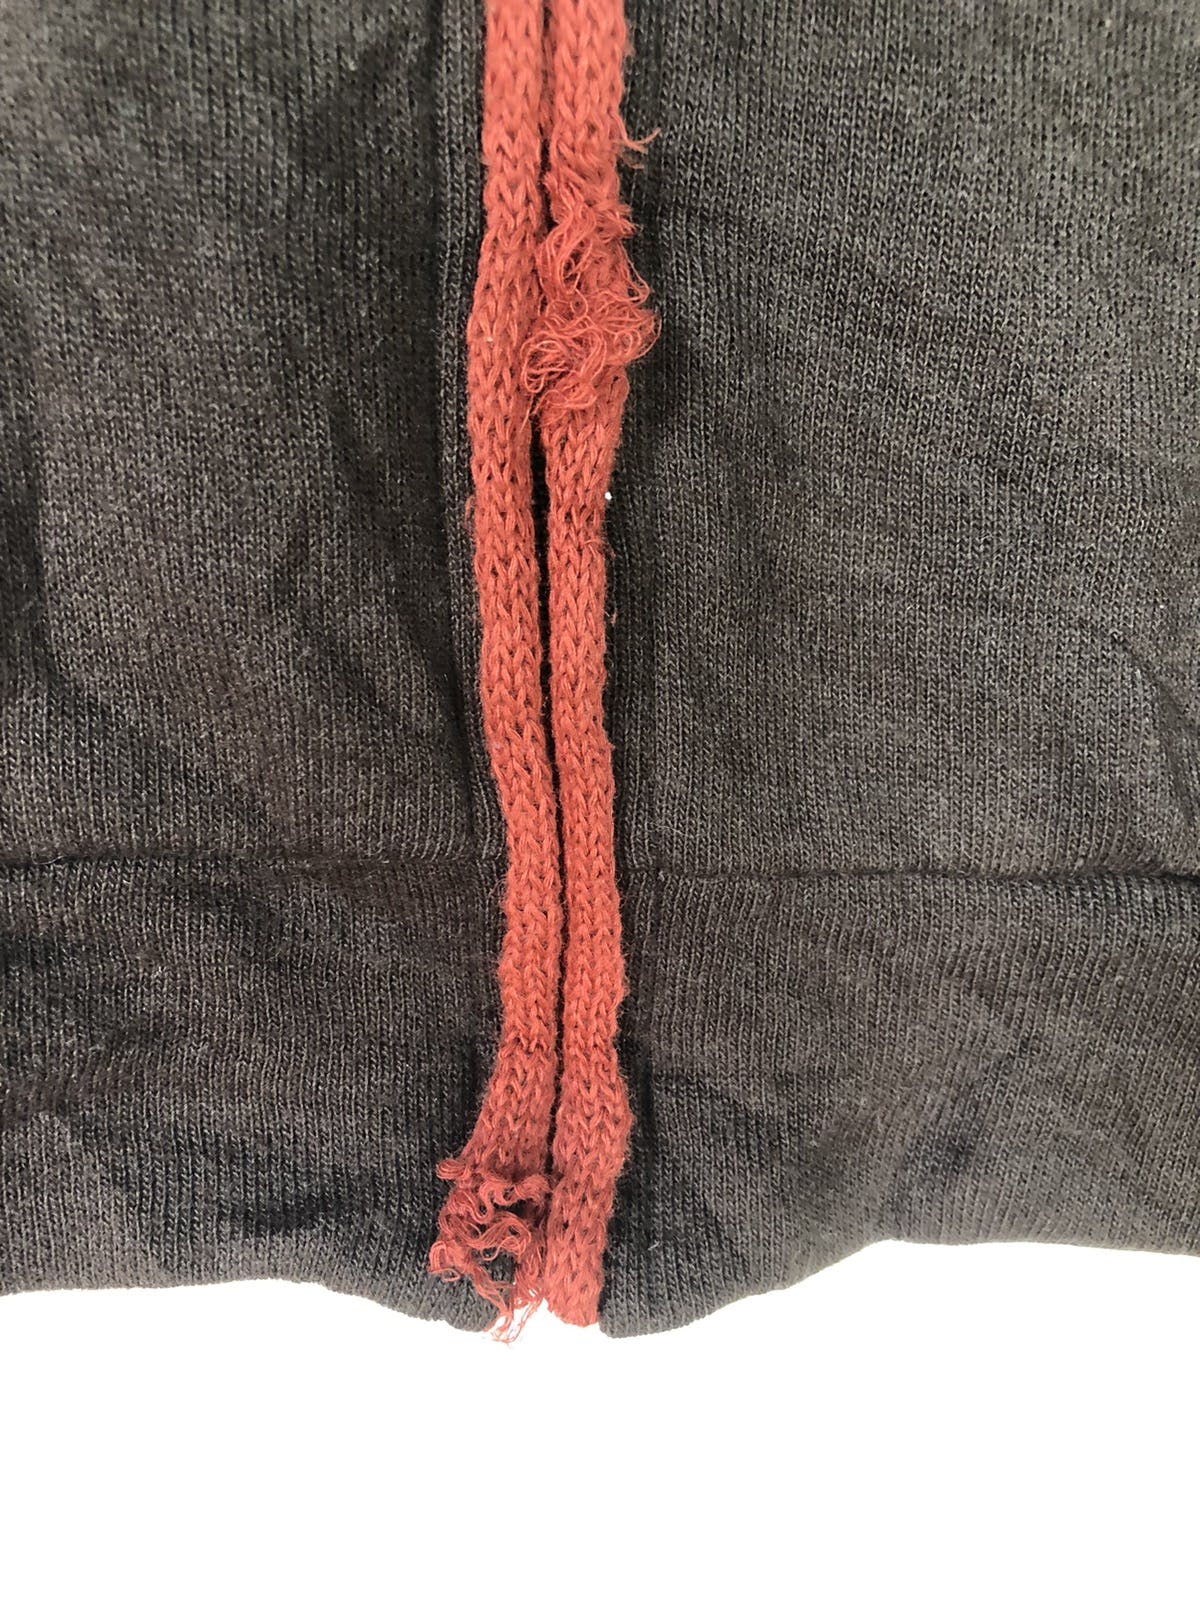 Vintage Lacoste Zip up Sweaters - 5